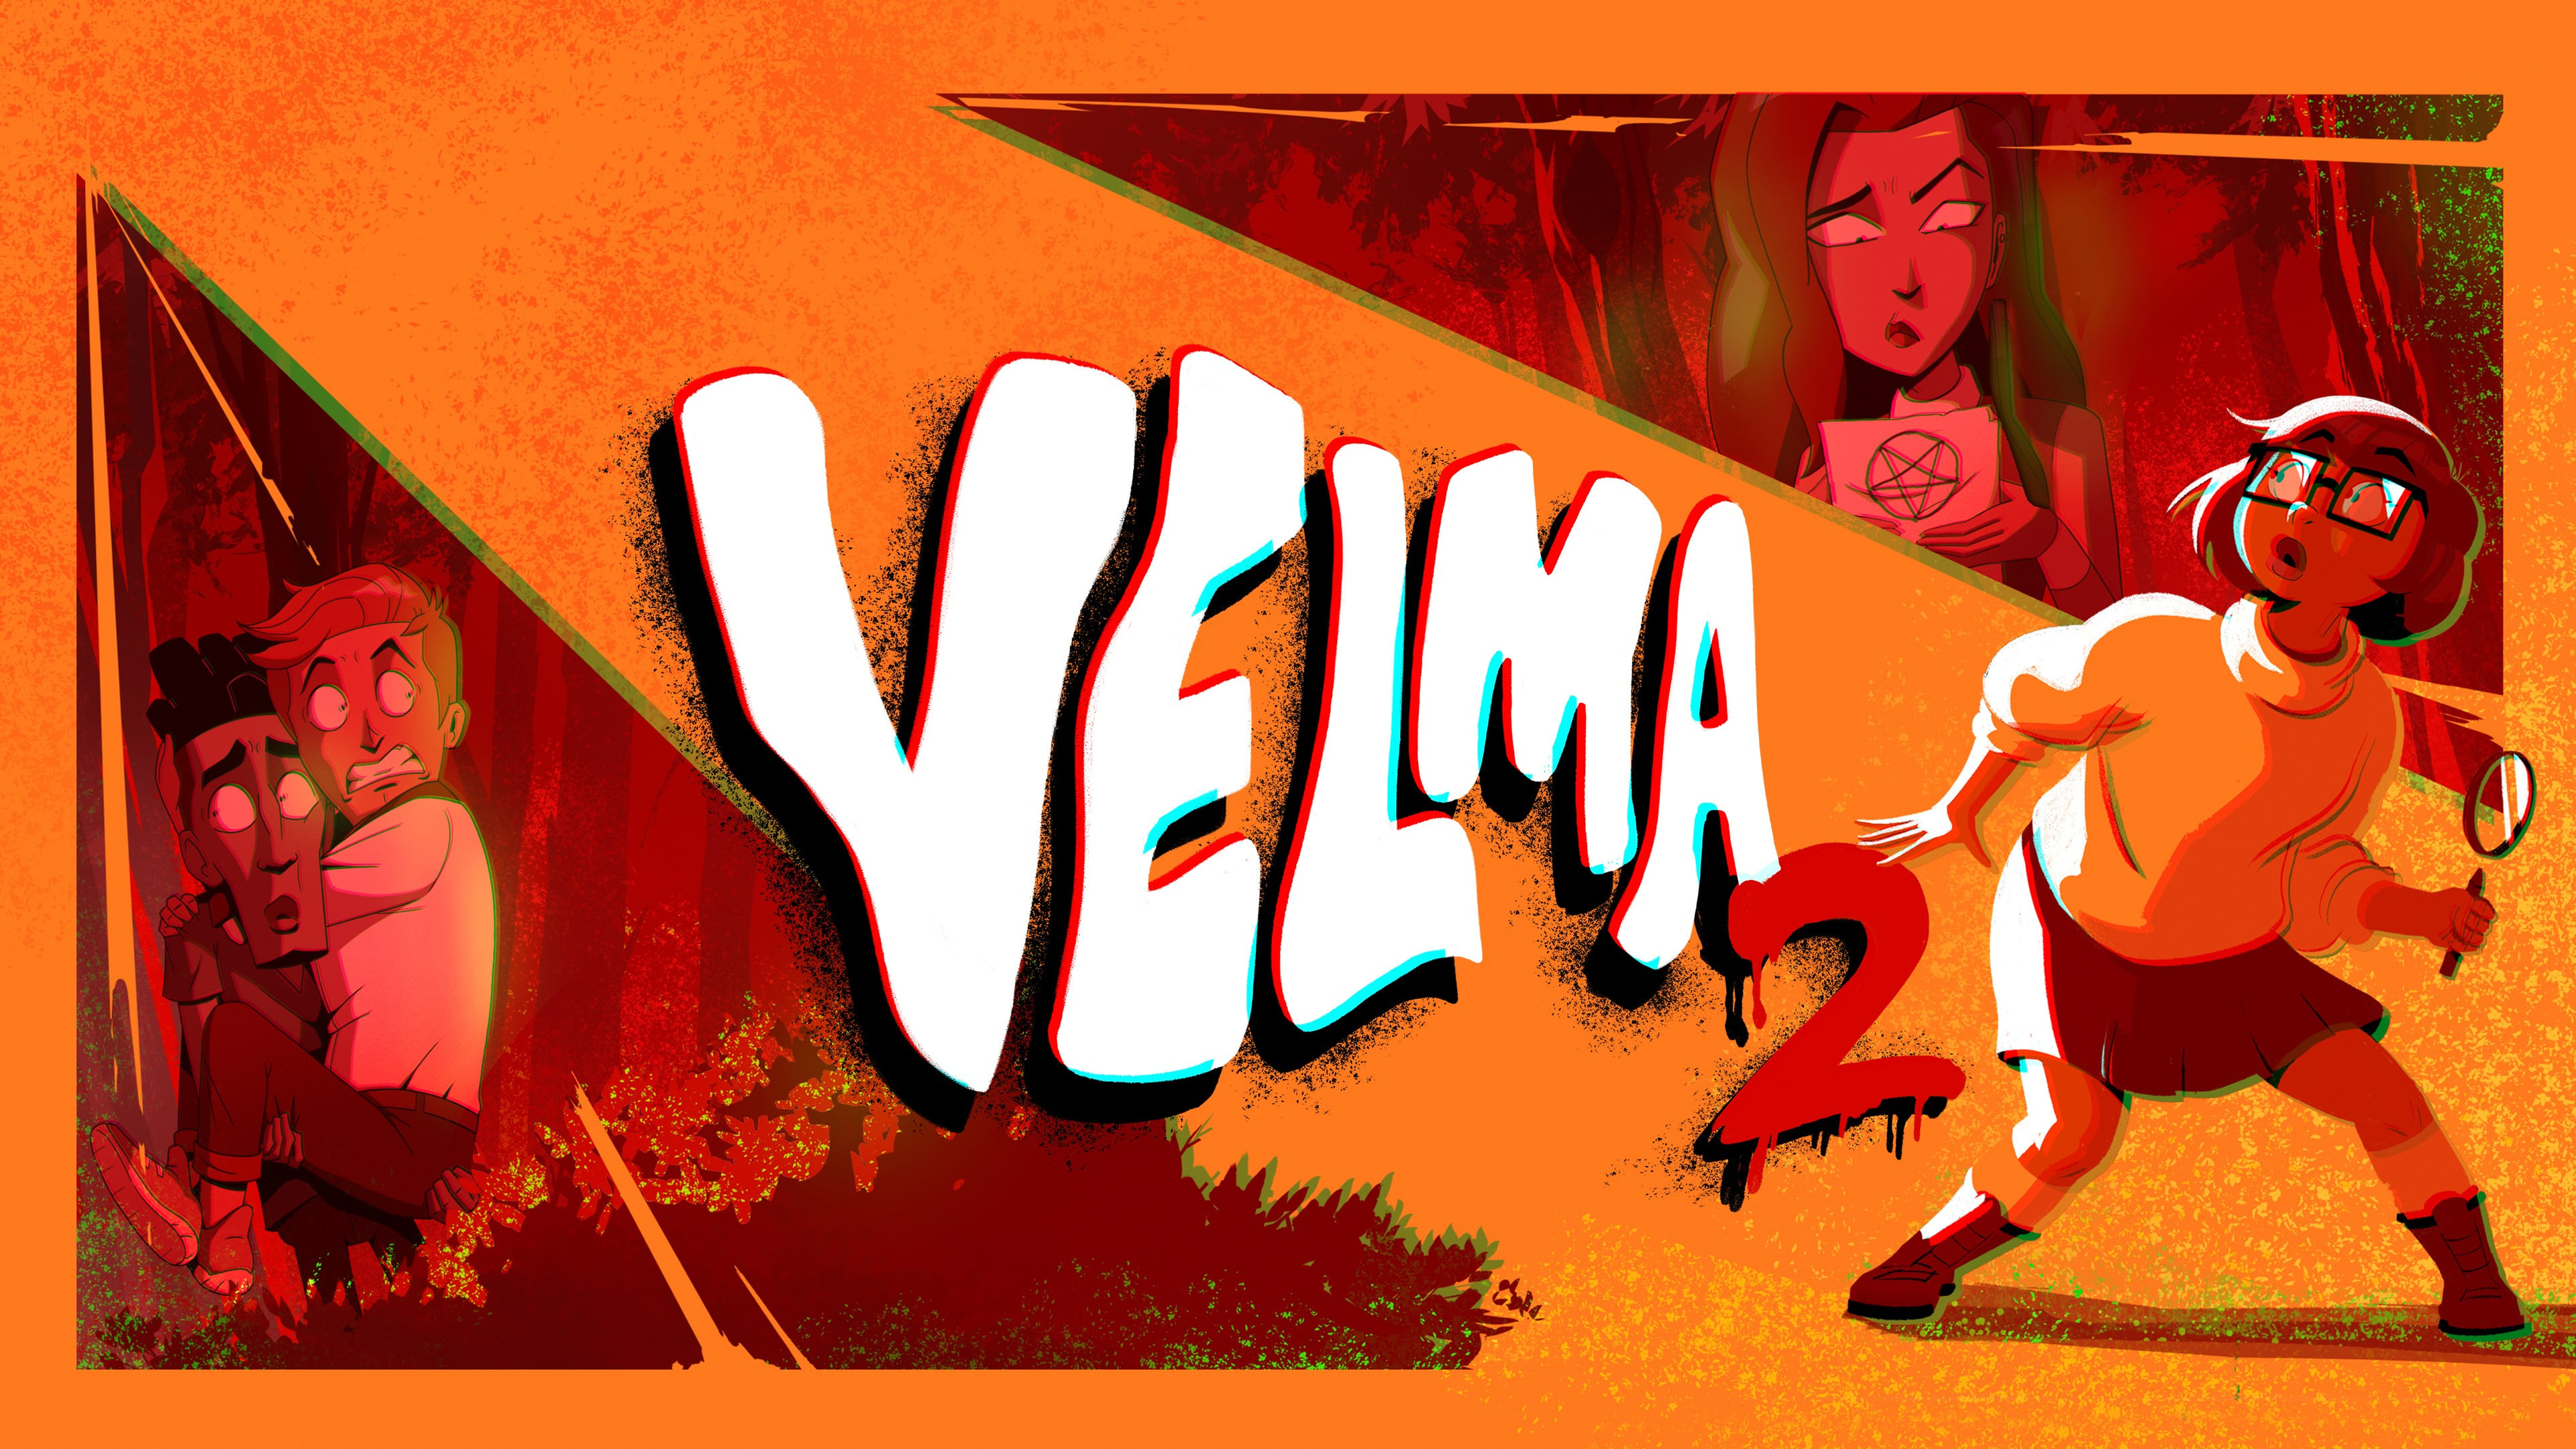 Velma - Season 1 Episode 8